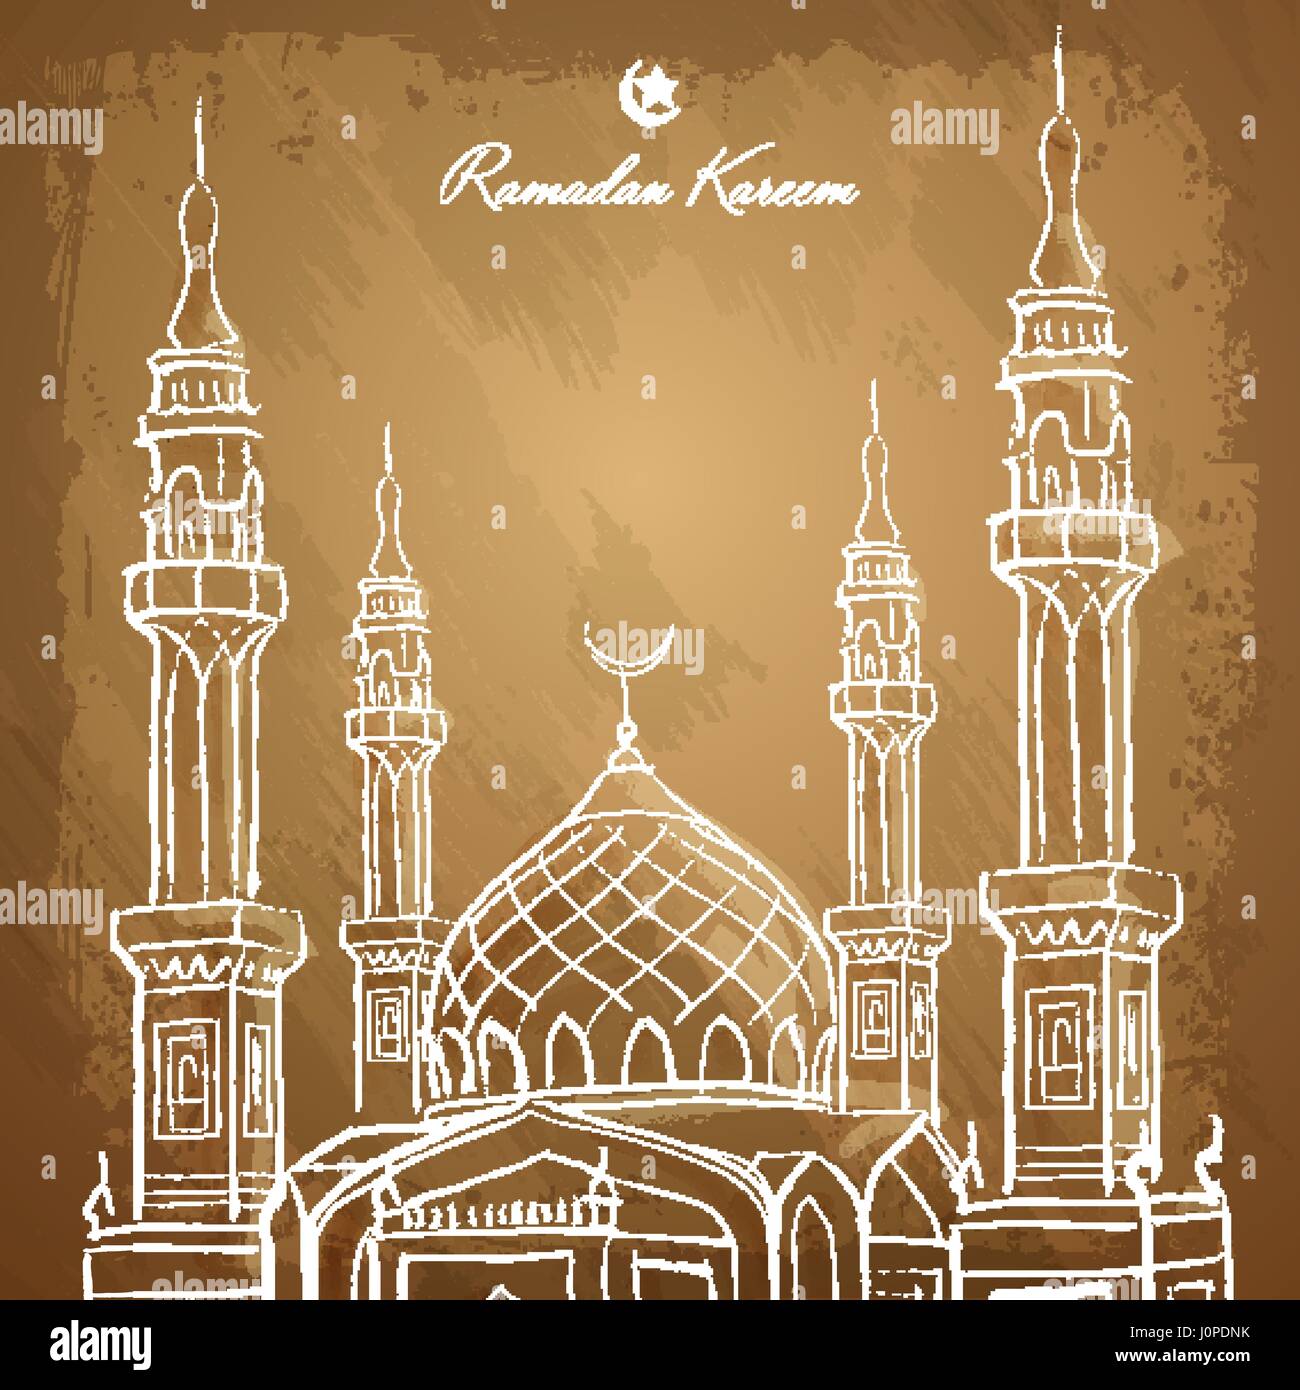 Ramadan Kareem islamic background outline mosque sketch Stock Vector